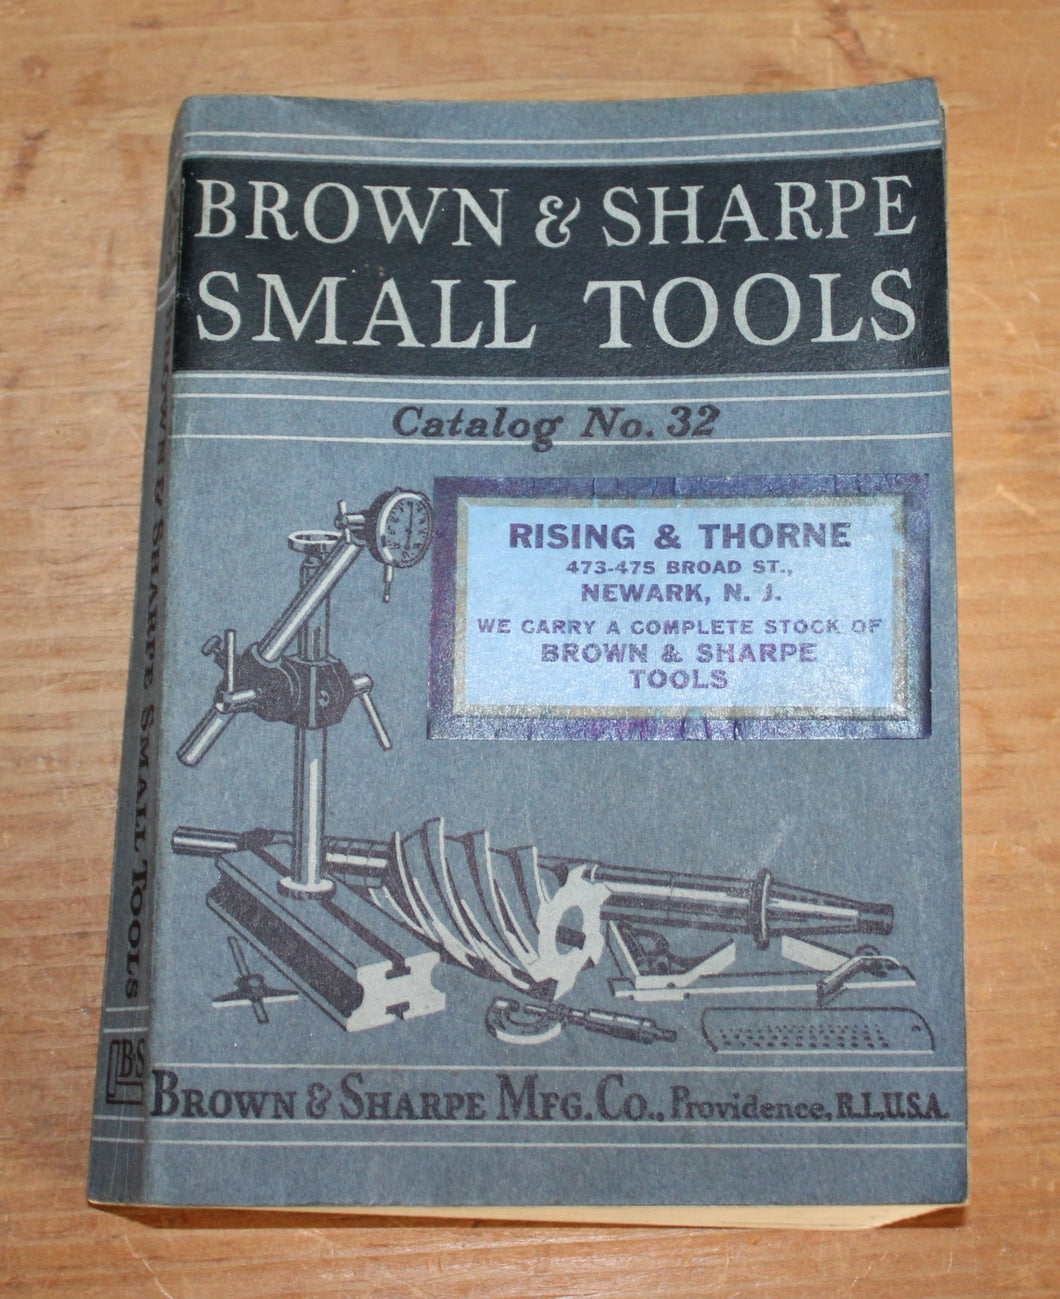 Vintage 1935 Brown & Sharpe Small Tools Catalog No. 32